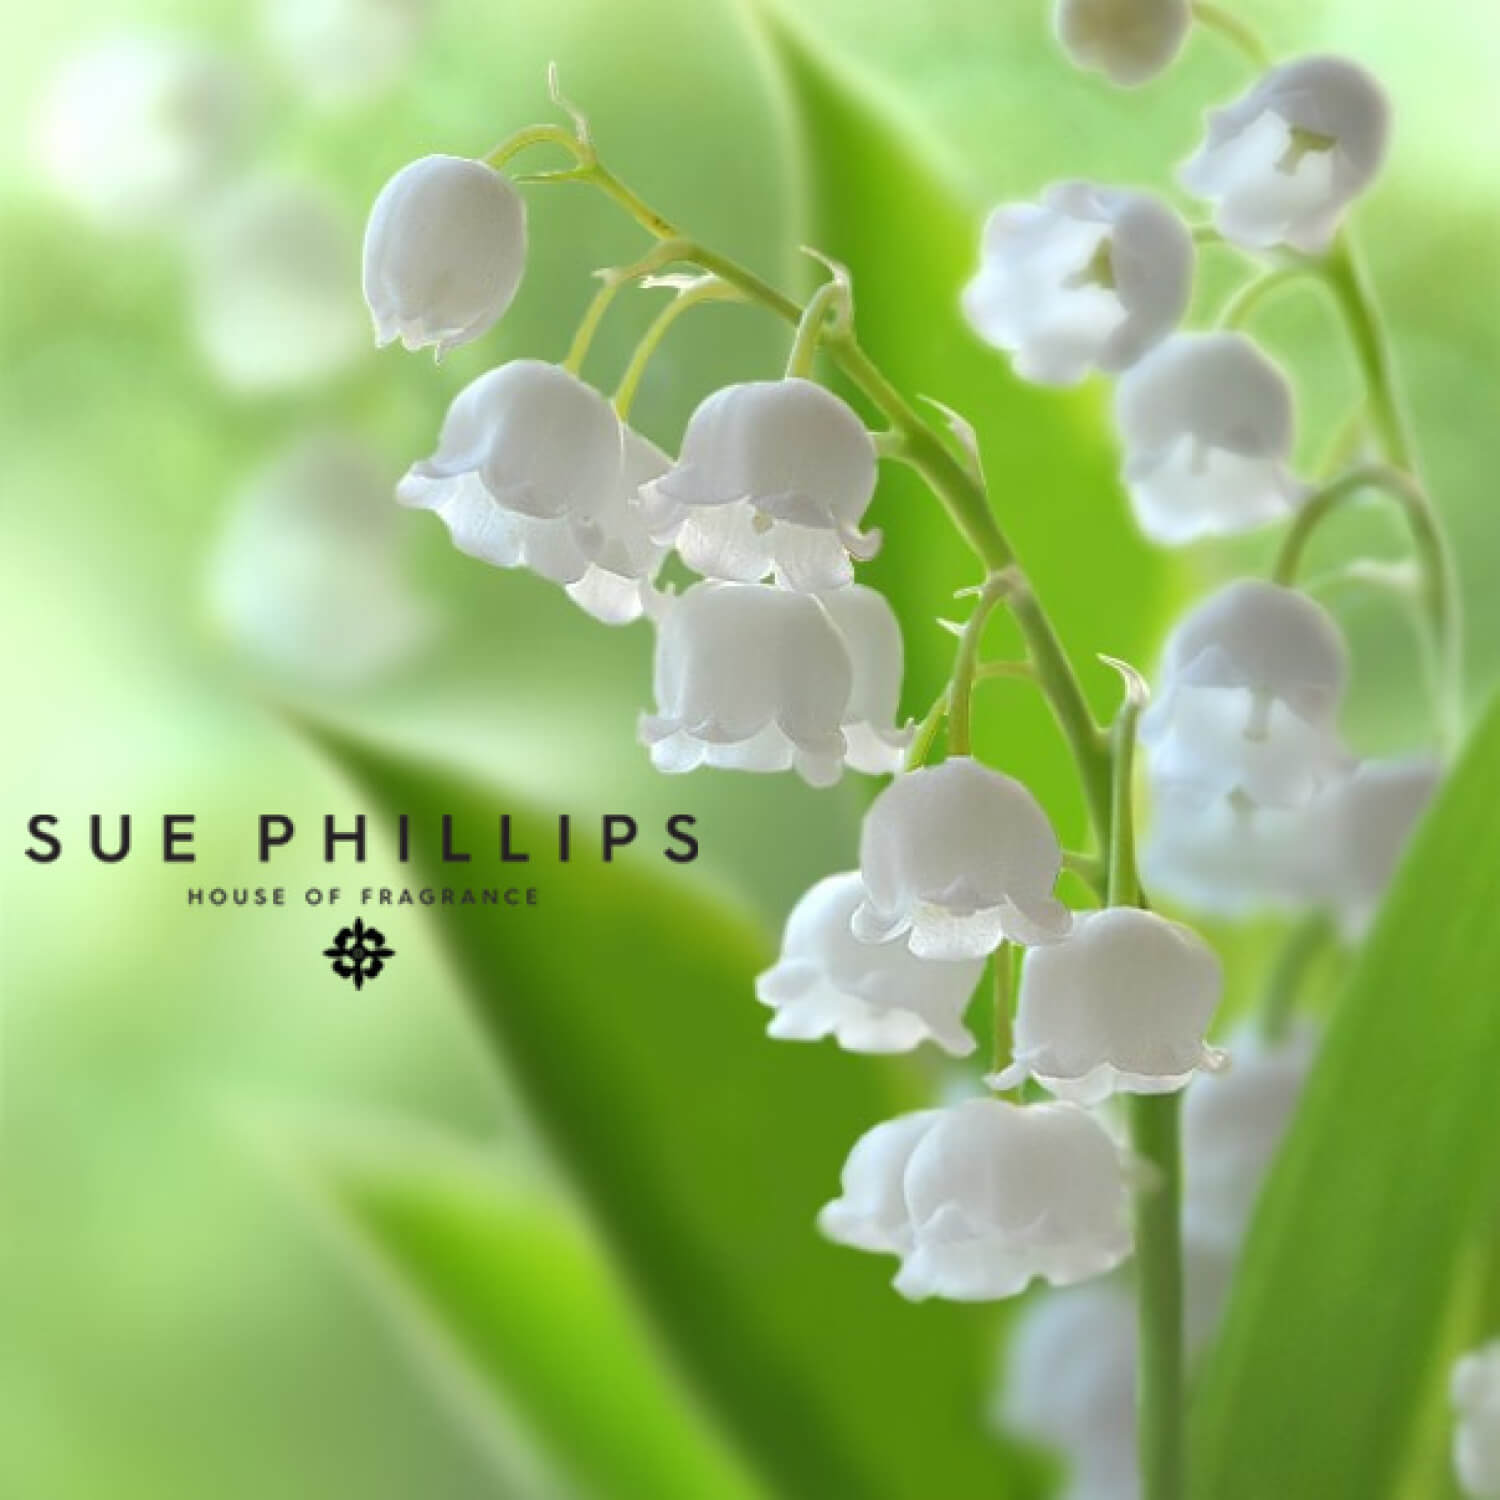 Sue Phillips Certificate – Sue Phillips Fragrance